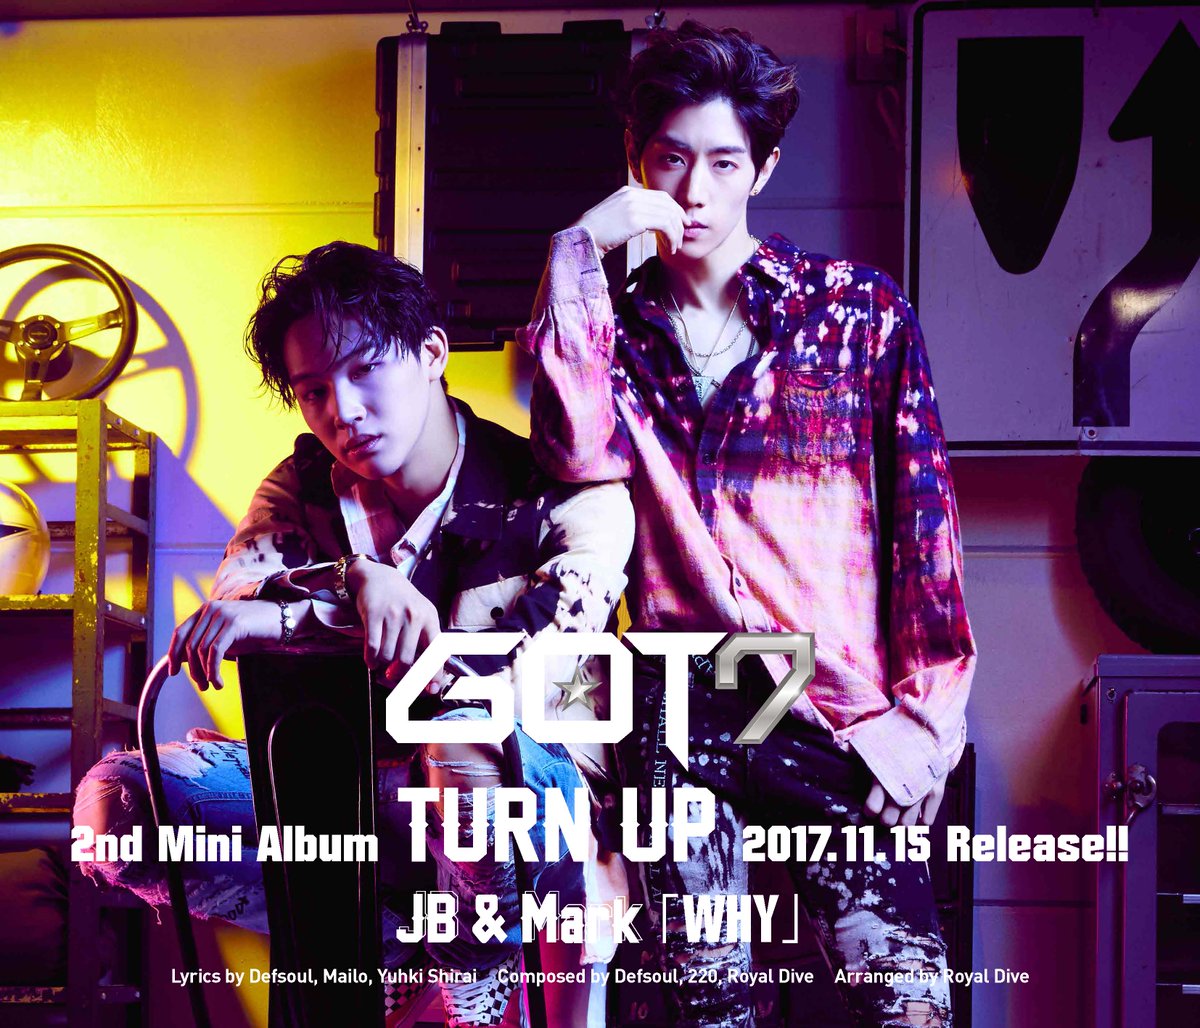 GOT7 2nd Mini Album <TURN UP>
Release Date: 2017. 11. 15
 
JB & Mark
「WHY」 

got7japan.com  
 
#GOT7 #TURNUP